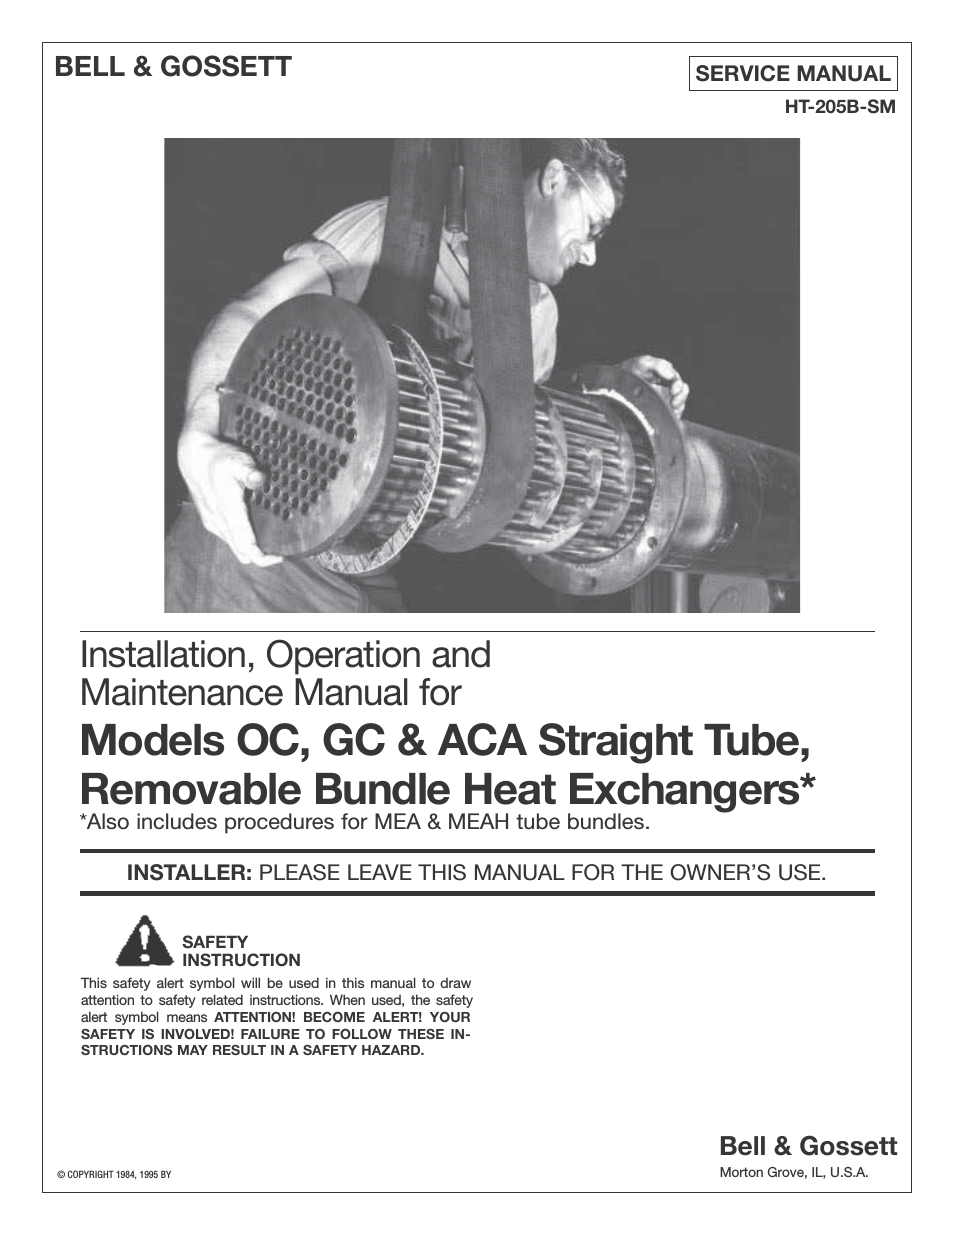 HT 205B SM Models ACA Straight Tube, Removable Bundle Heat Exchangers